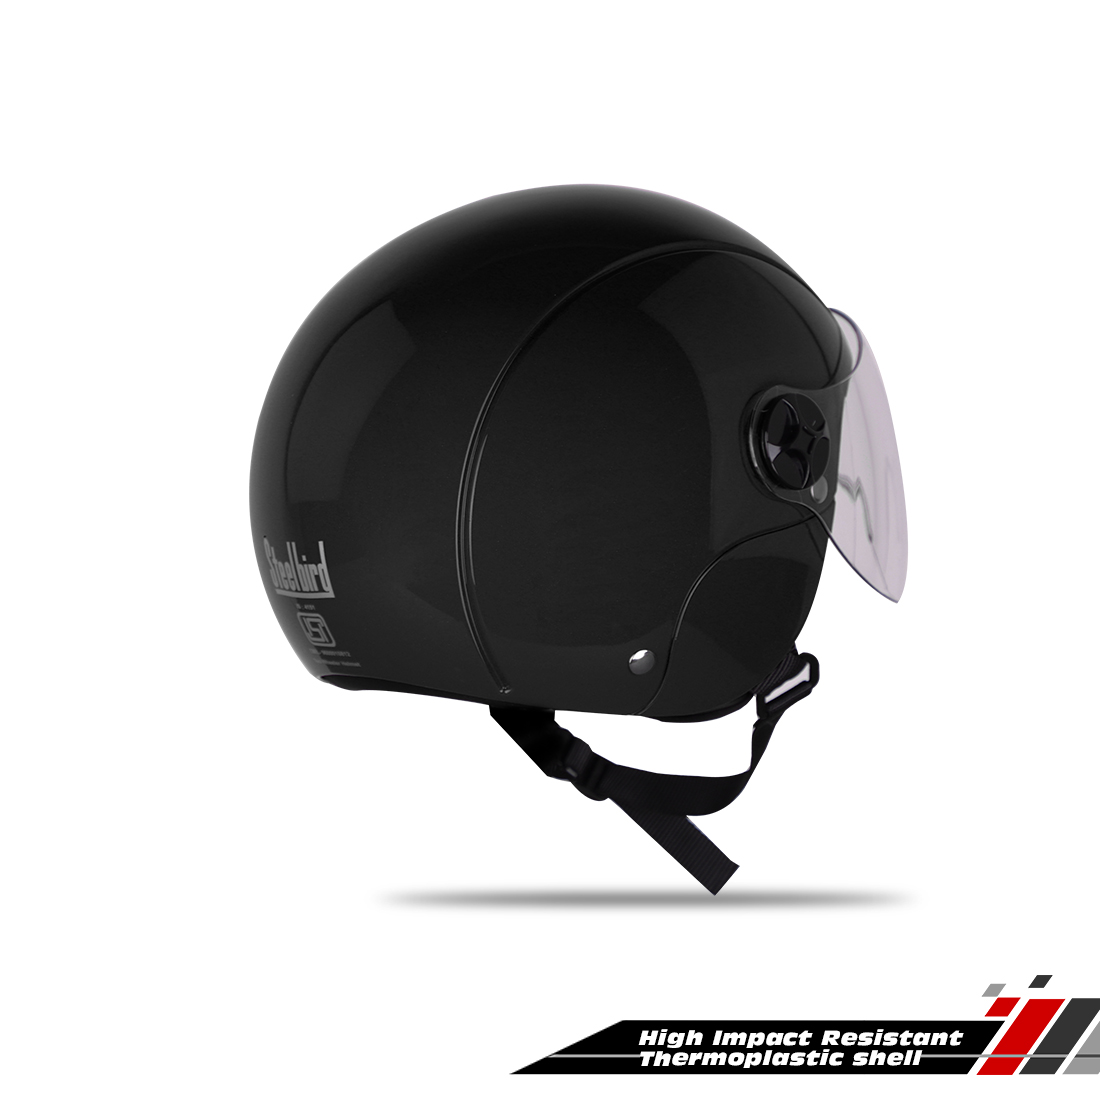 Steelbird SBH-16 Dex ISI Certified Open Face Helmet (Glossy Black With Clear Visor)